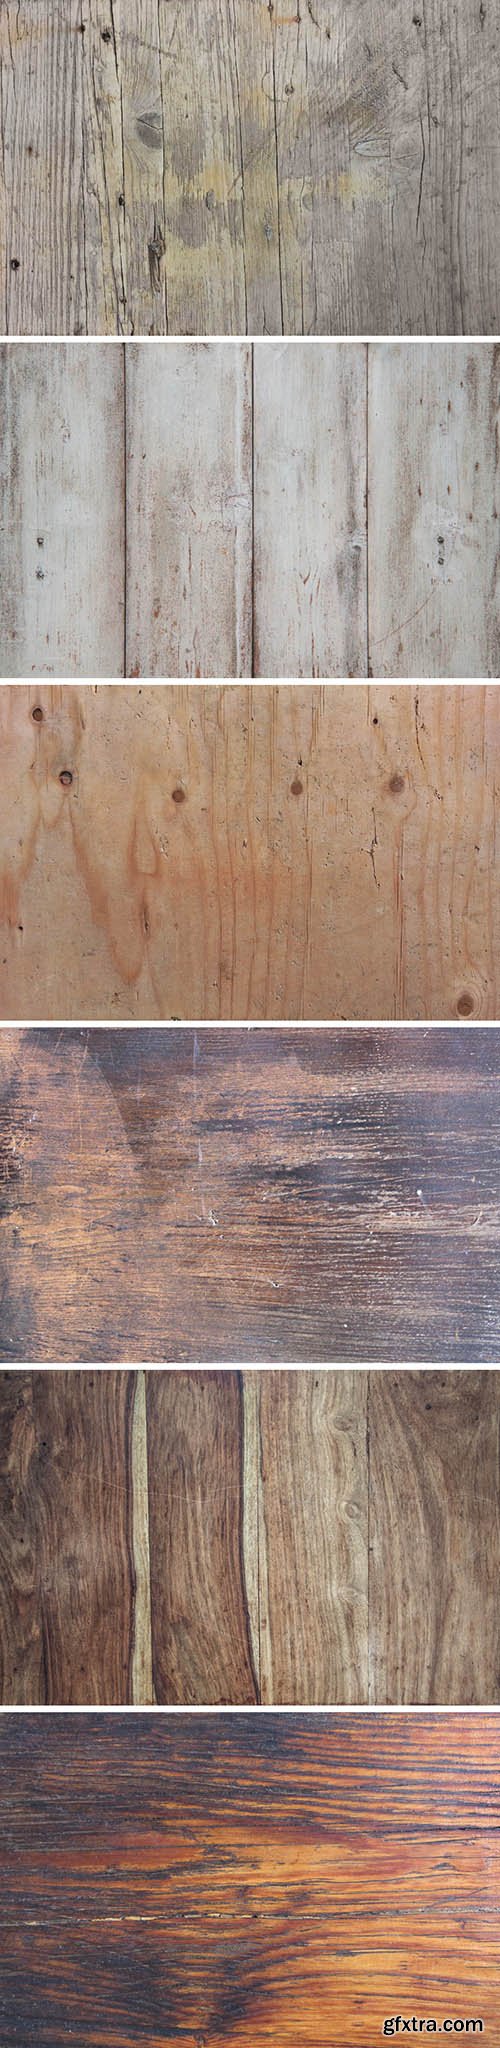 Textures - 6 Vintage Wood Backgrounds Vol.3